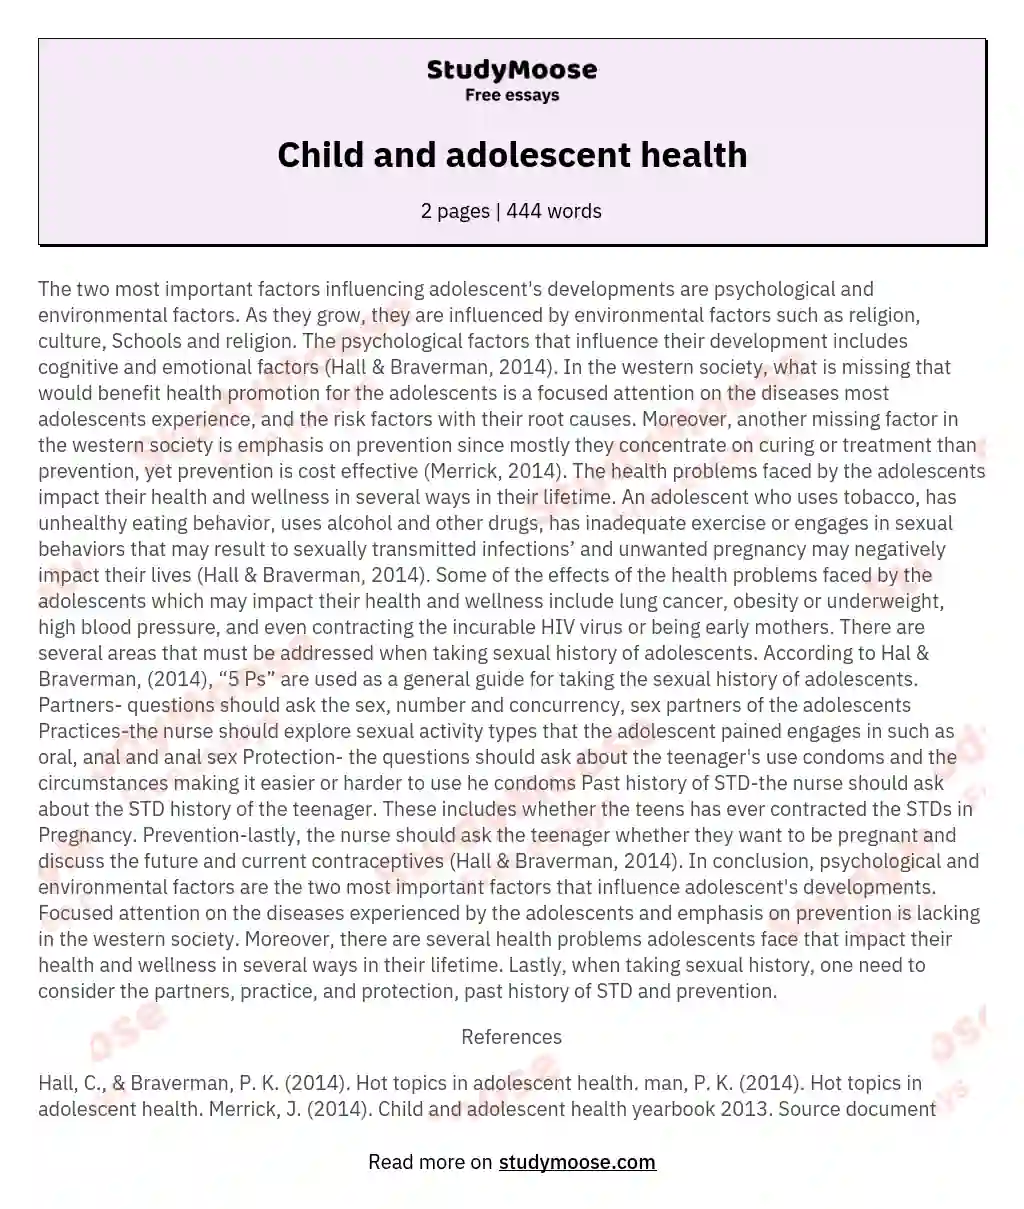 Child and adolescent health essay